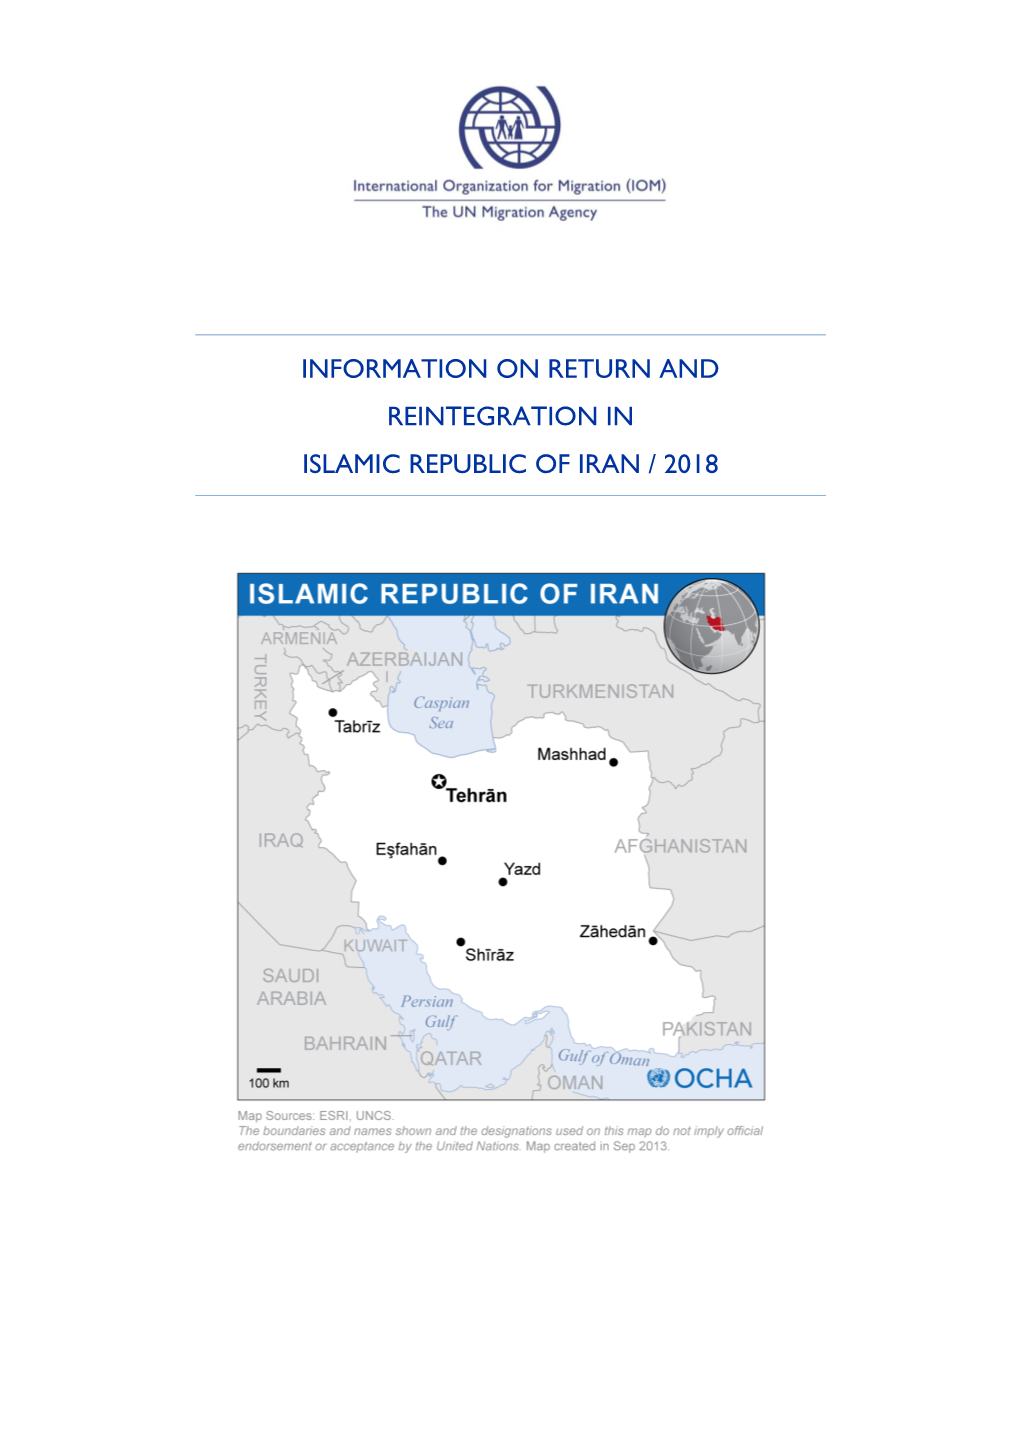 Information on Return and Reintegration in Islamic Republic of Iran / 2018